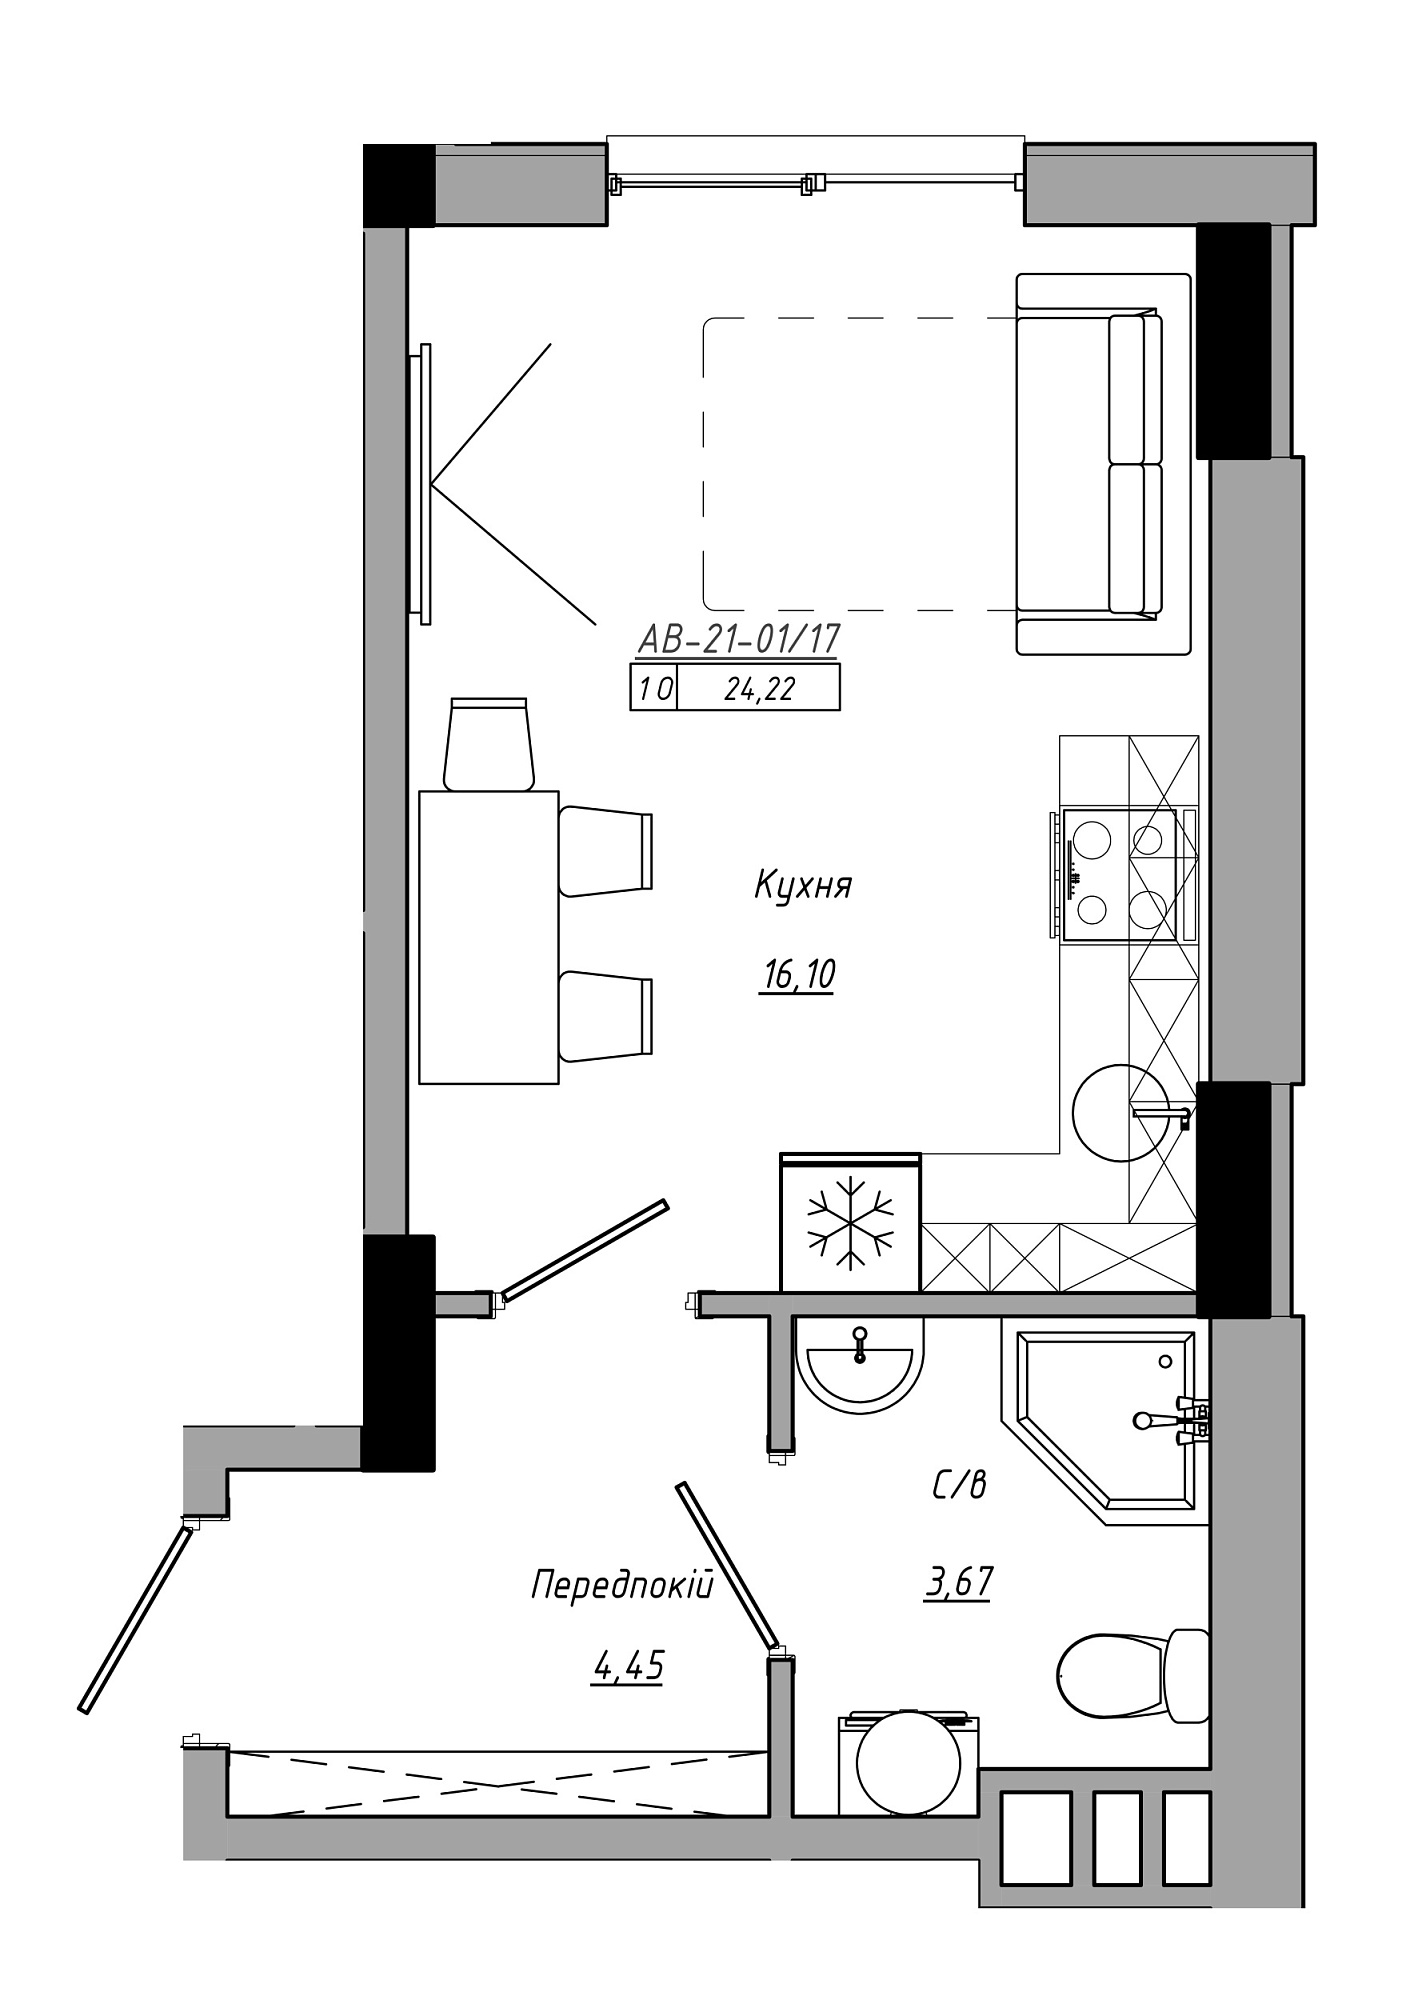 Planning Smart flats area 24.22m2, AB-21-01/00017.